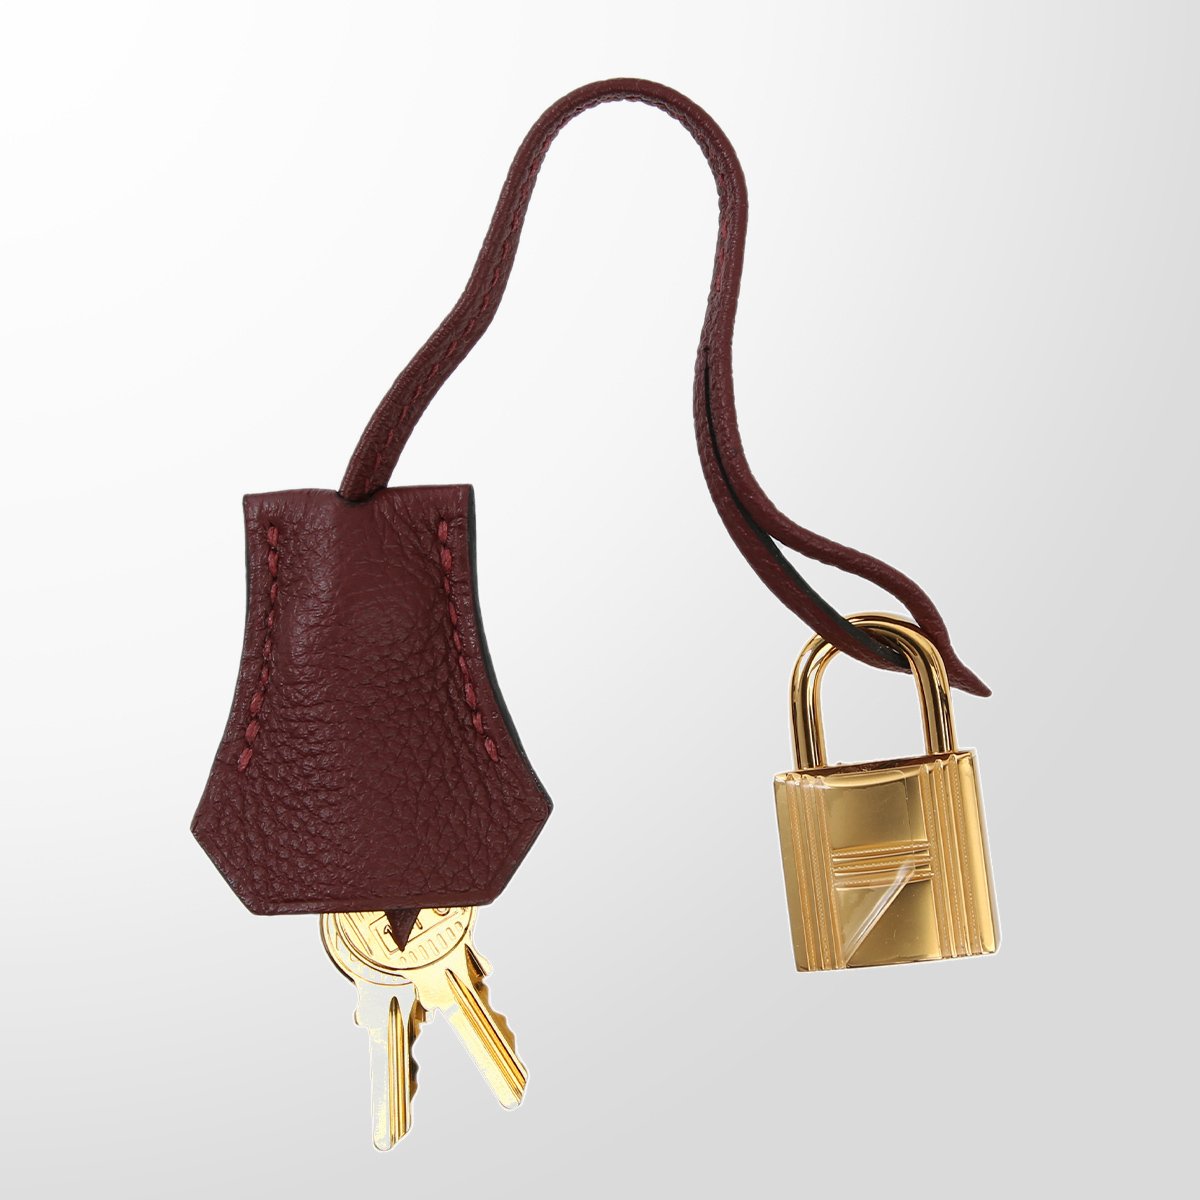 Hermès Birkin 25 Togo Leather Handbag In Dubai, Dubai, United Arab